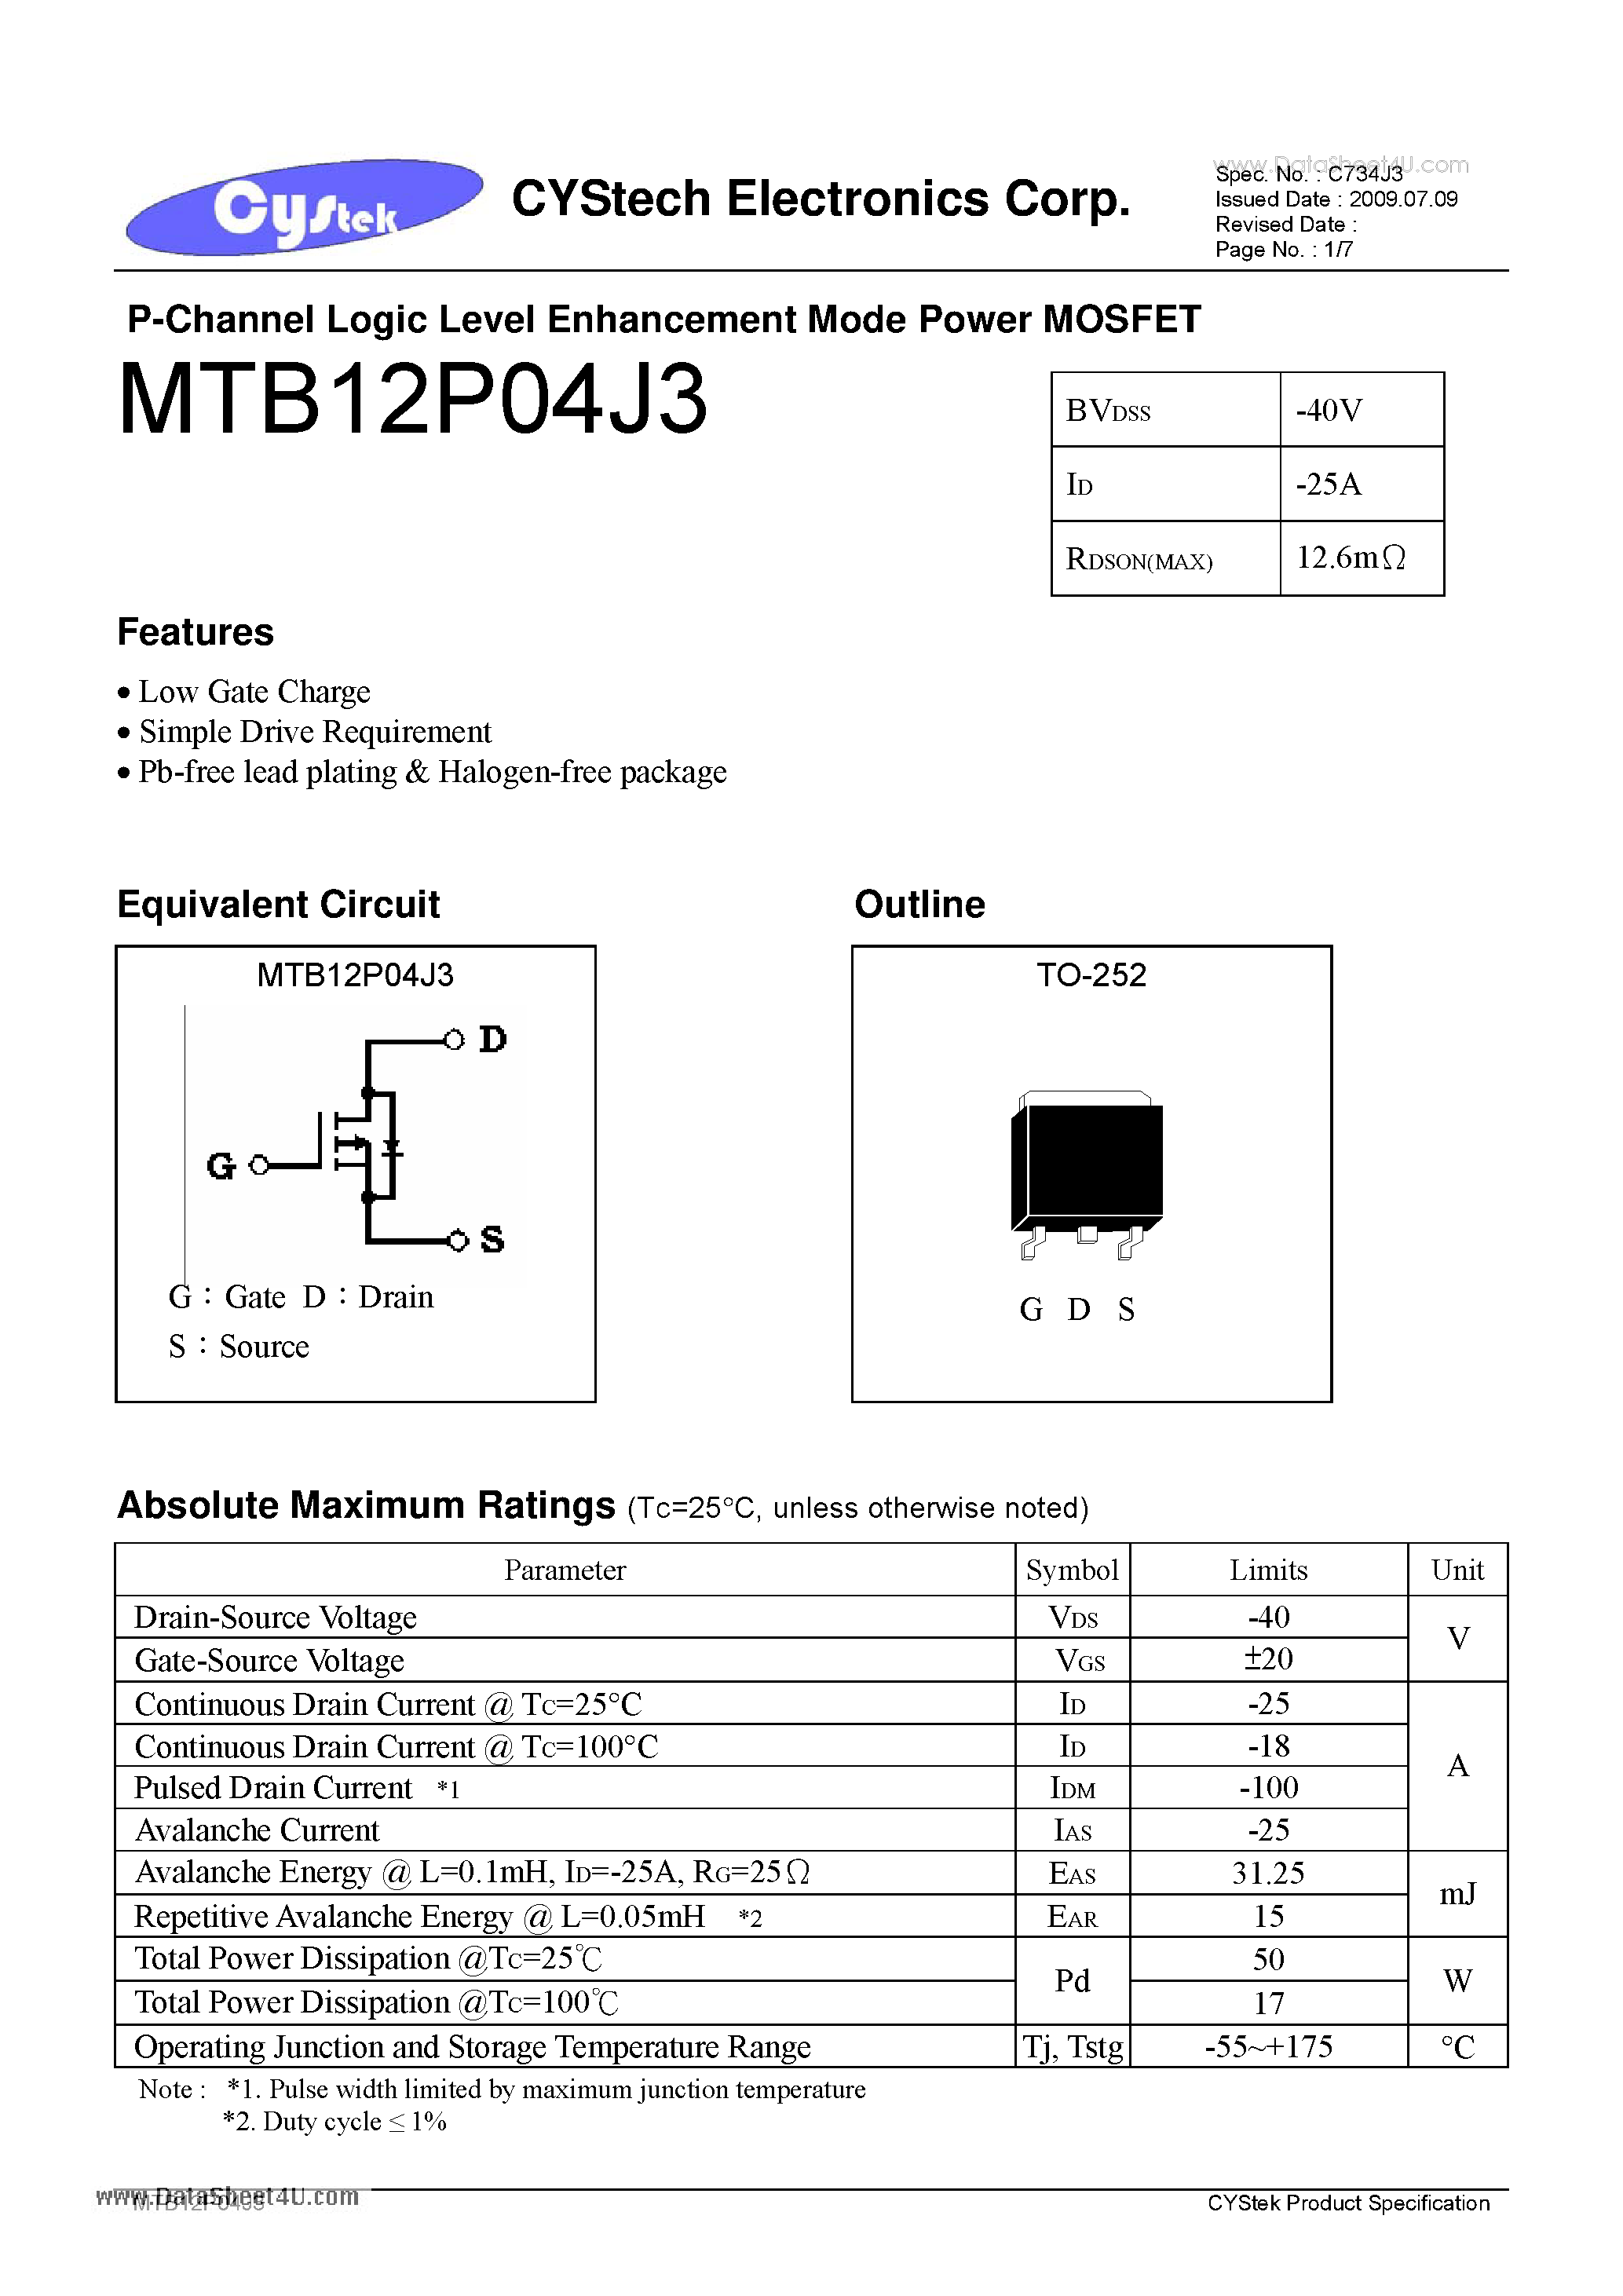 Datasheet MTB12P04J3 - P-Channel Logic Level Enhancement Mode Power MOSFET page 1